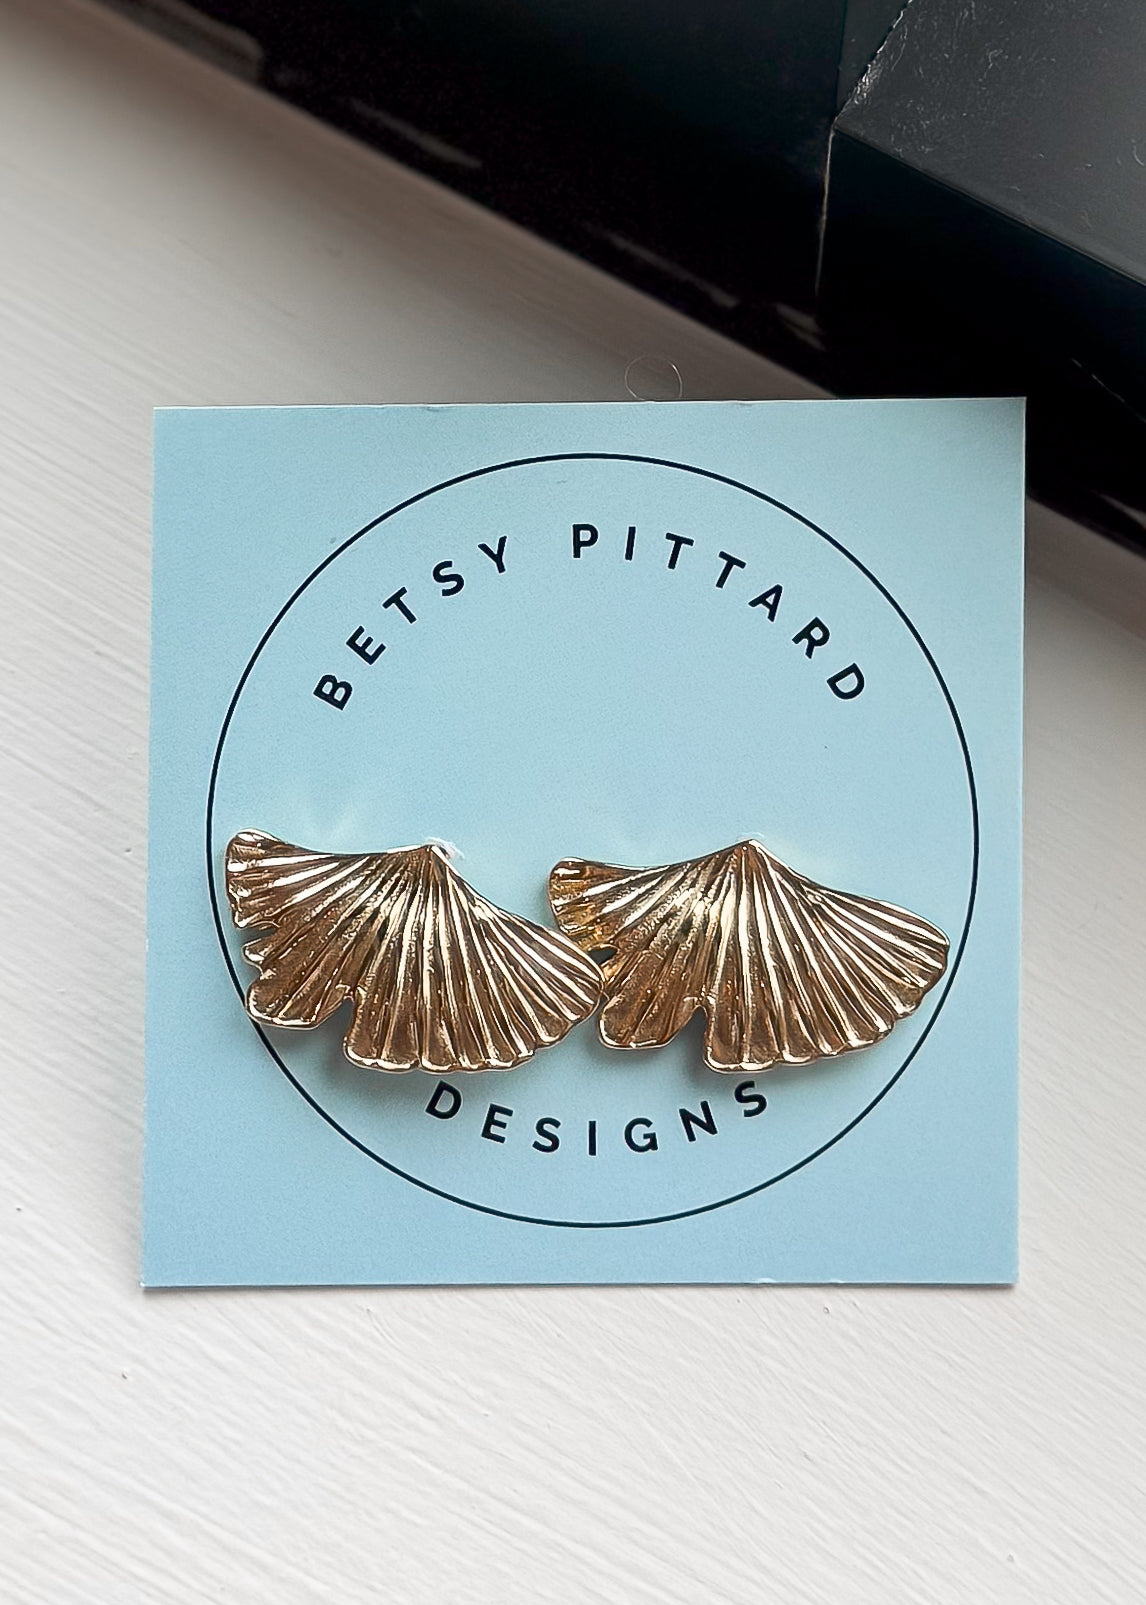 Betsy Pittard Designs: Ashton